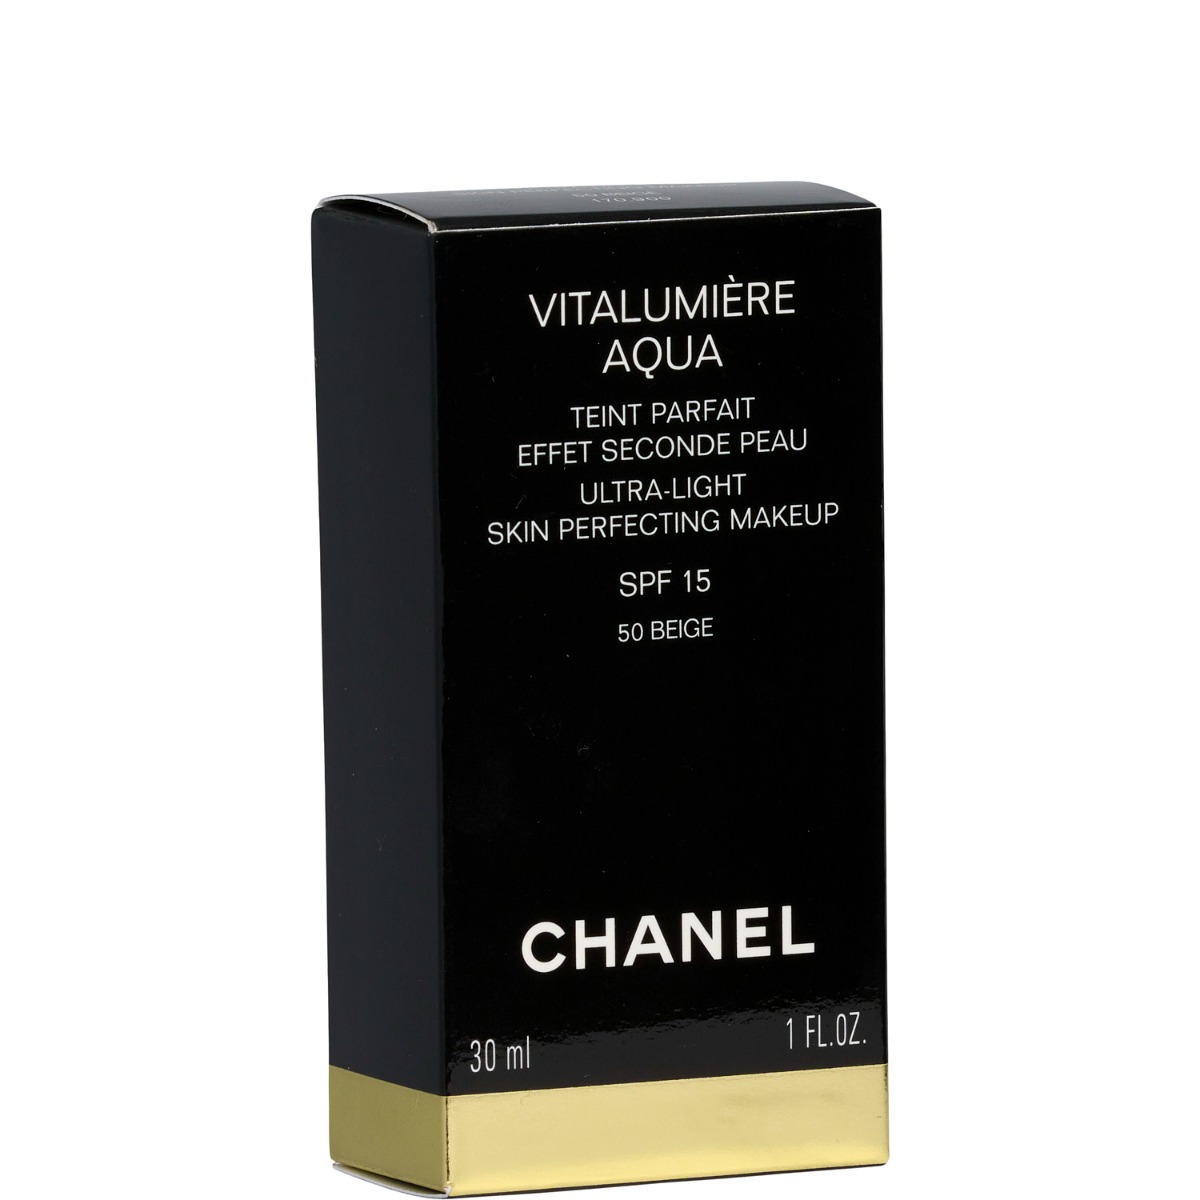 Chanel Vitalumière Aqua SPF15 #50 Beige, 30 ml.